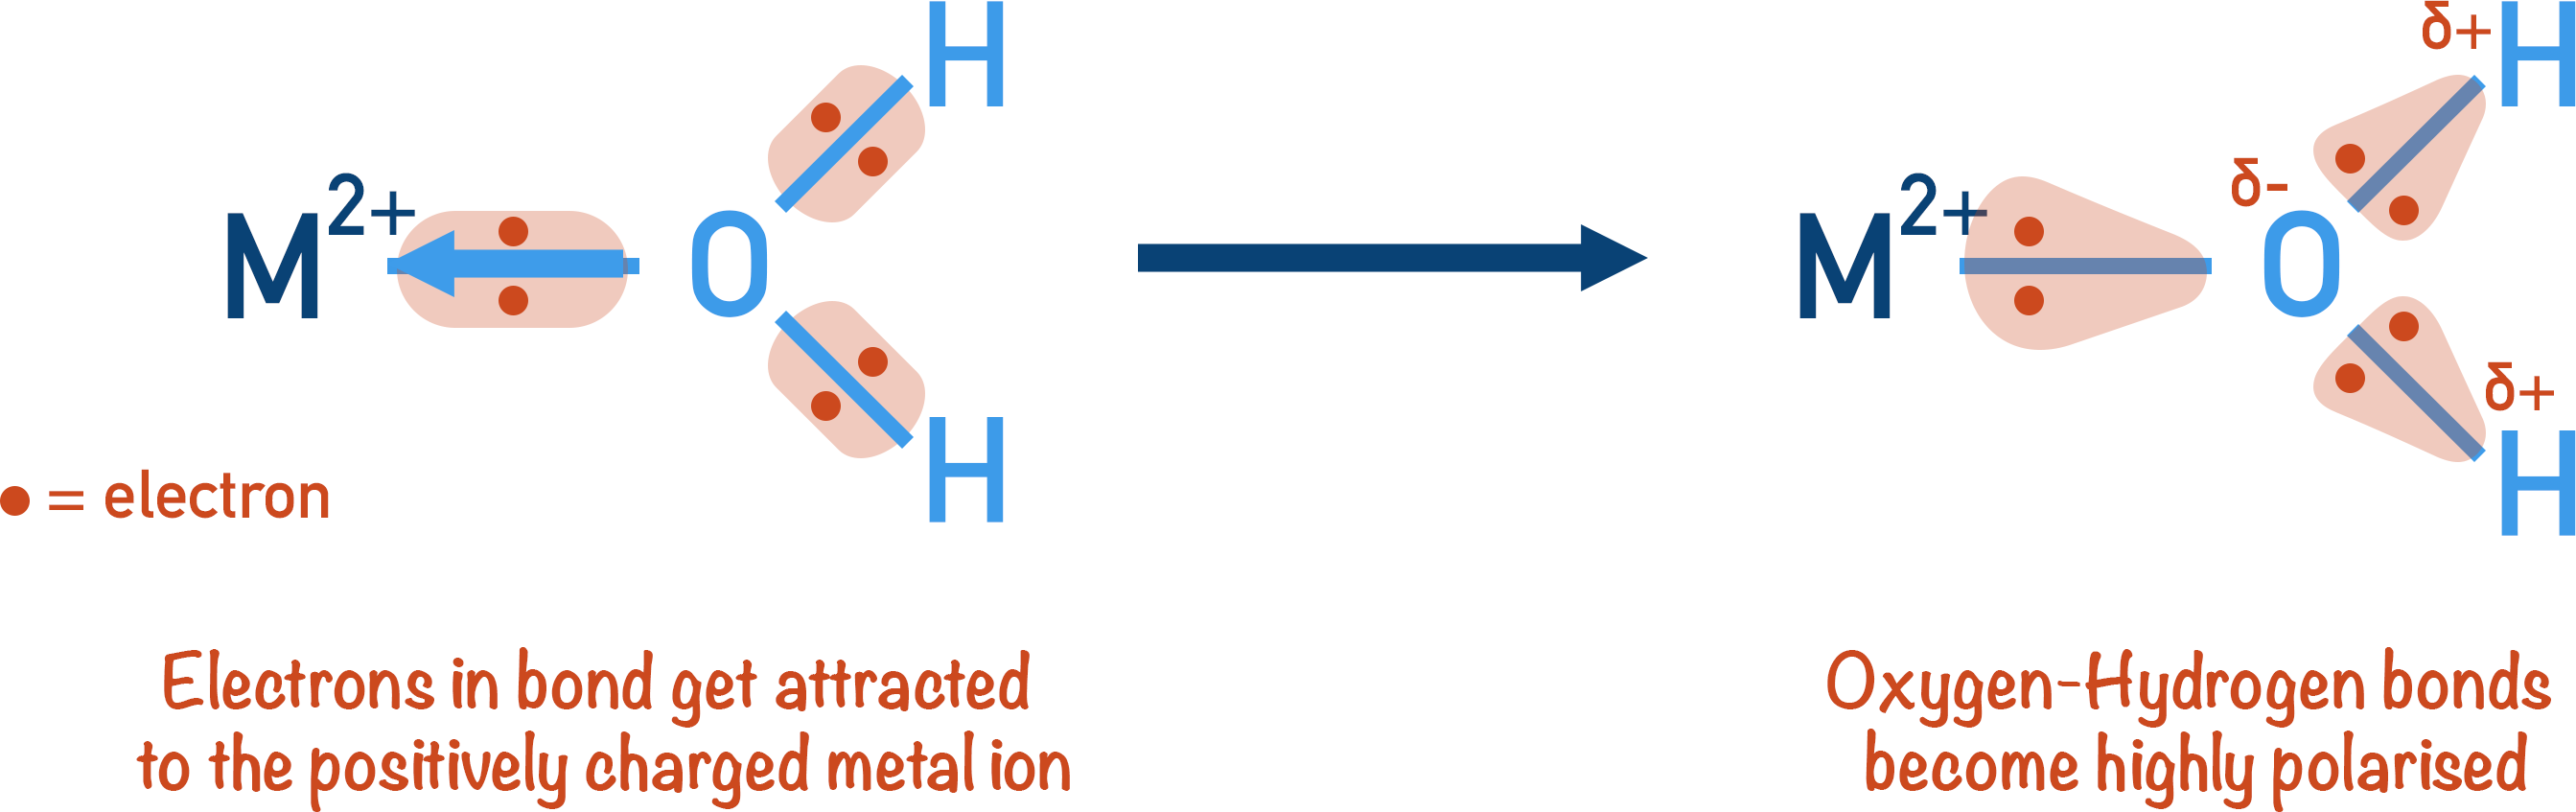 polarisation of metal ligan co-ordinate bond